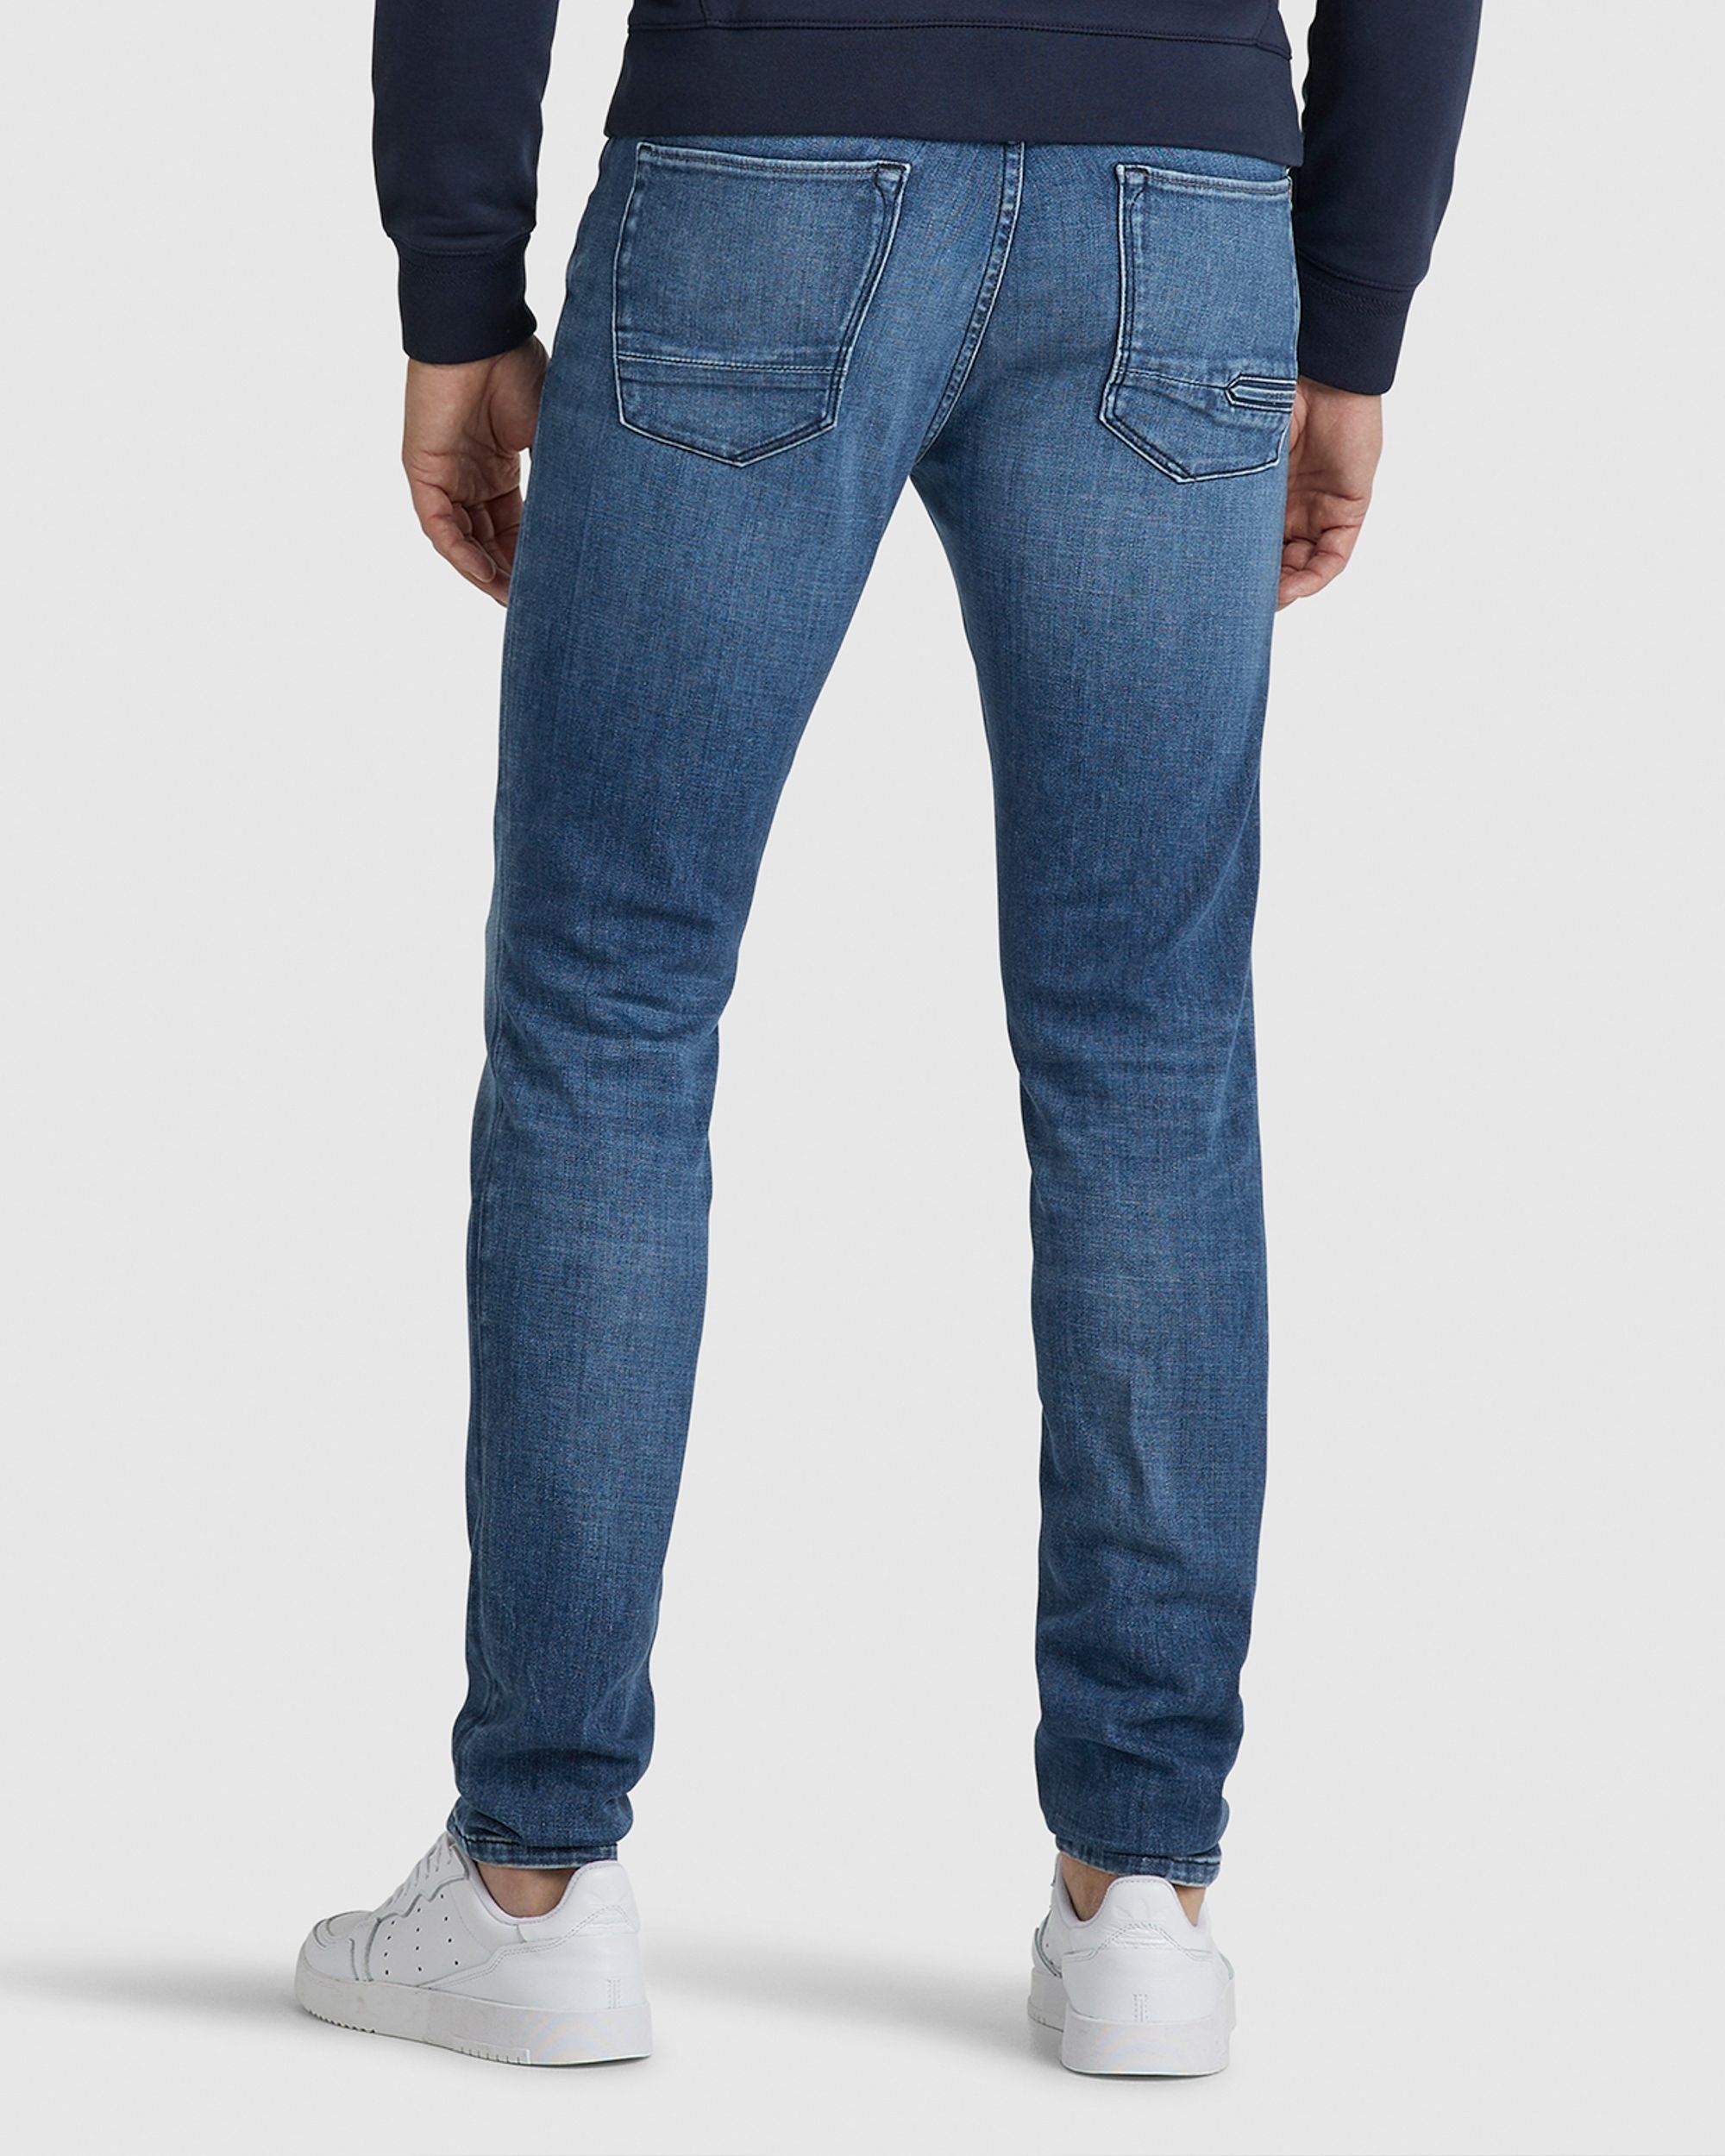 Cast Iron Riser Slim Fit Jeans Blauw 081932-001-29/32